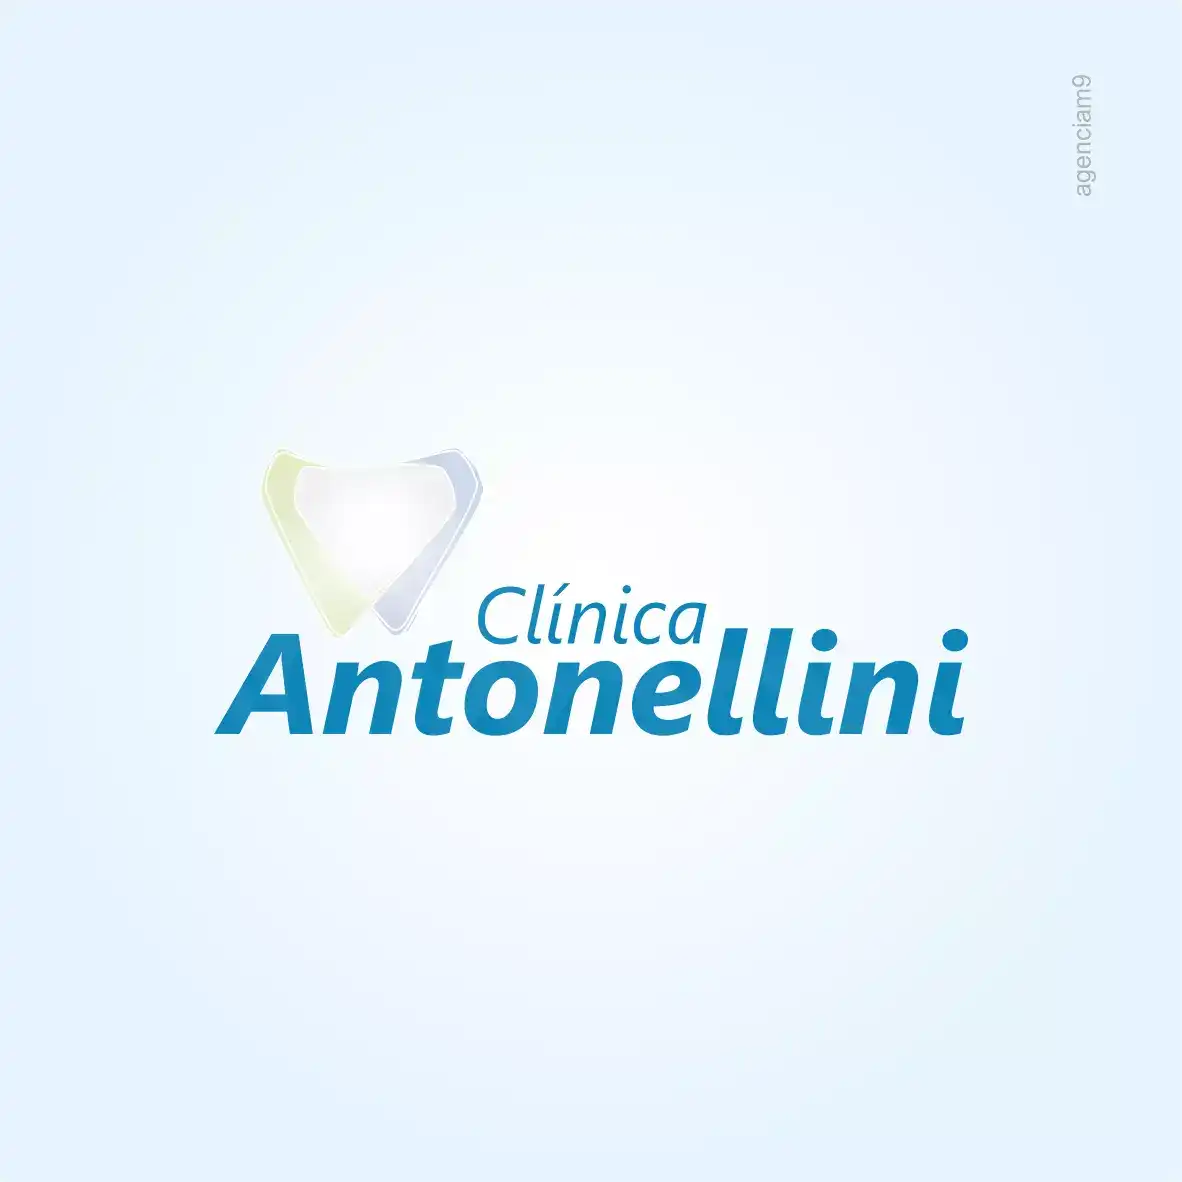 
Logo Logotipo Logomarca Clínica Dental Ortodontia Dentista



